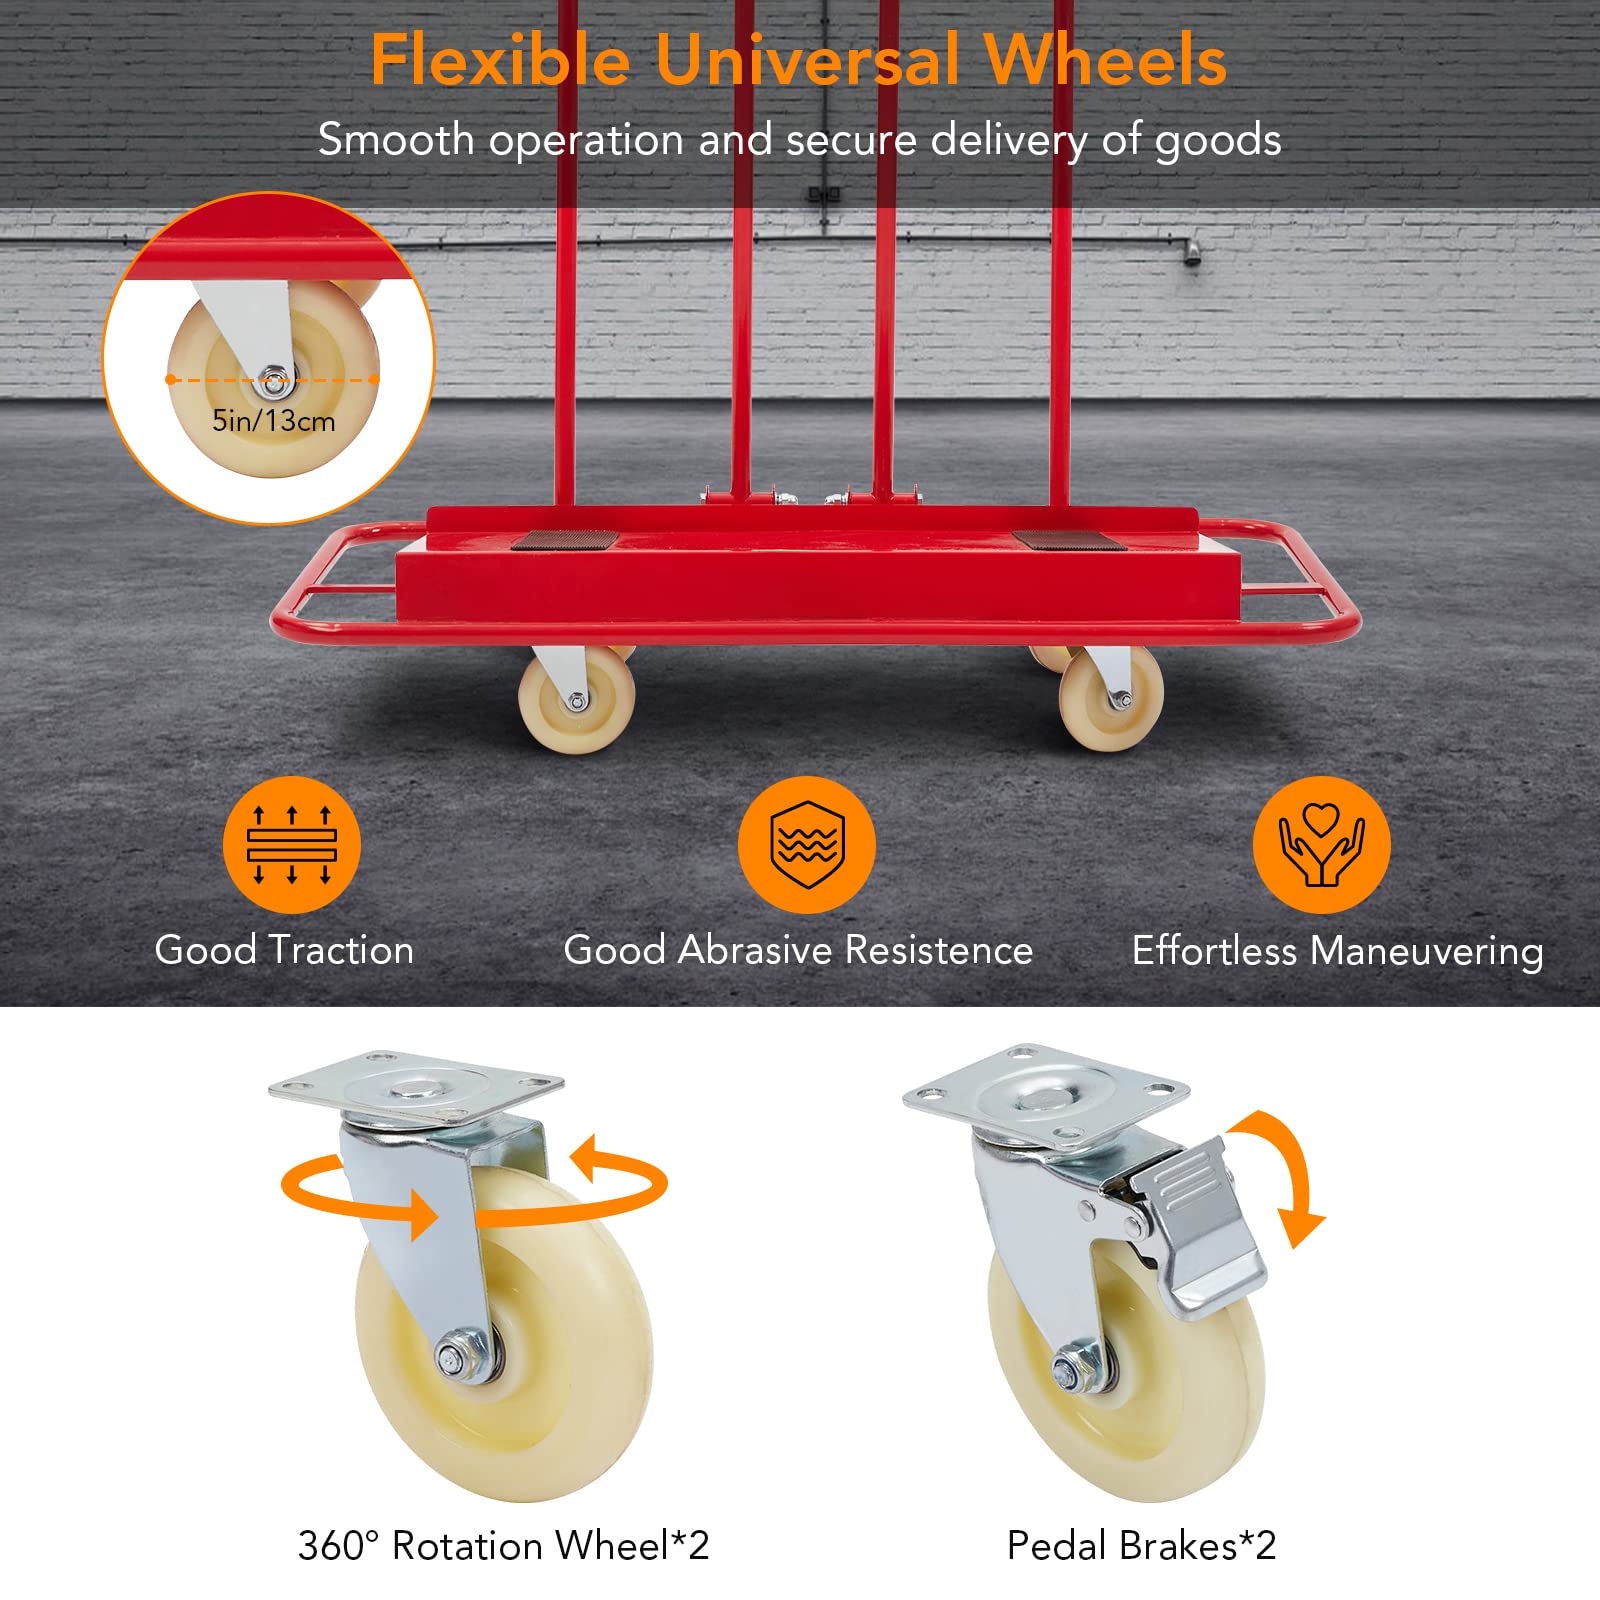 1600Lbs Heavy Duty Drywall Cart, Swivel Casters, Red